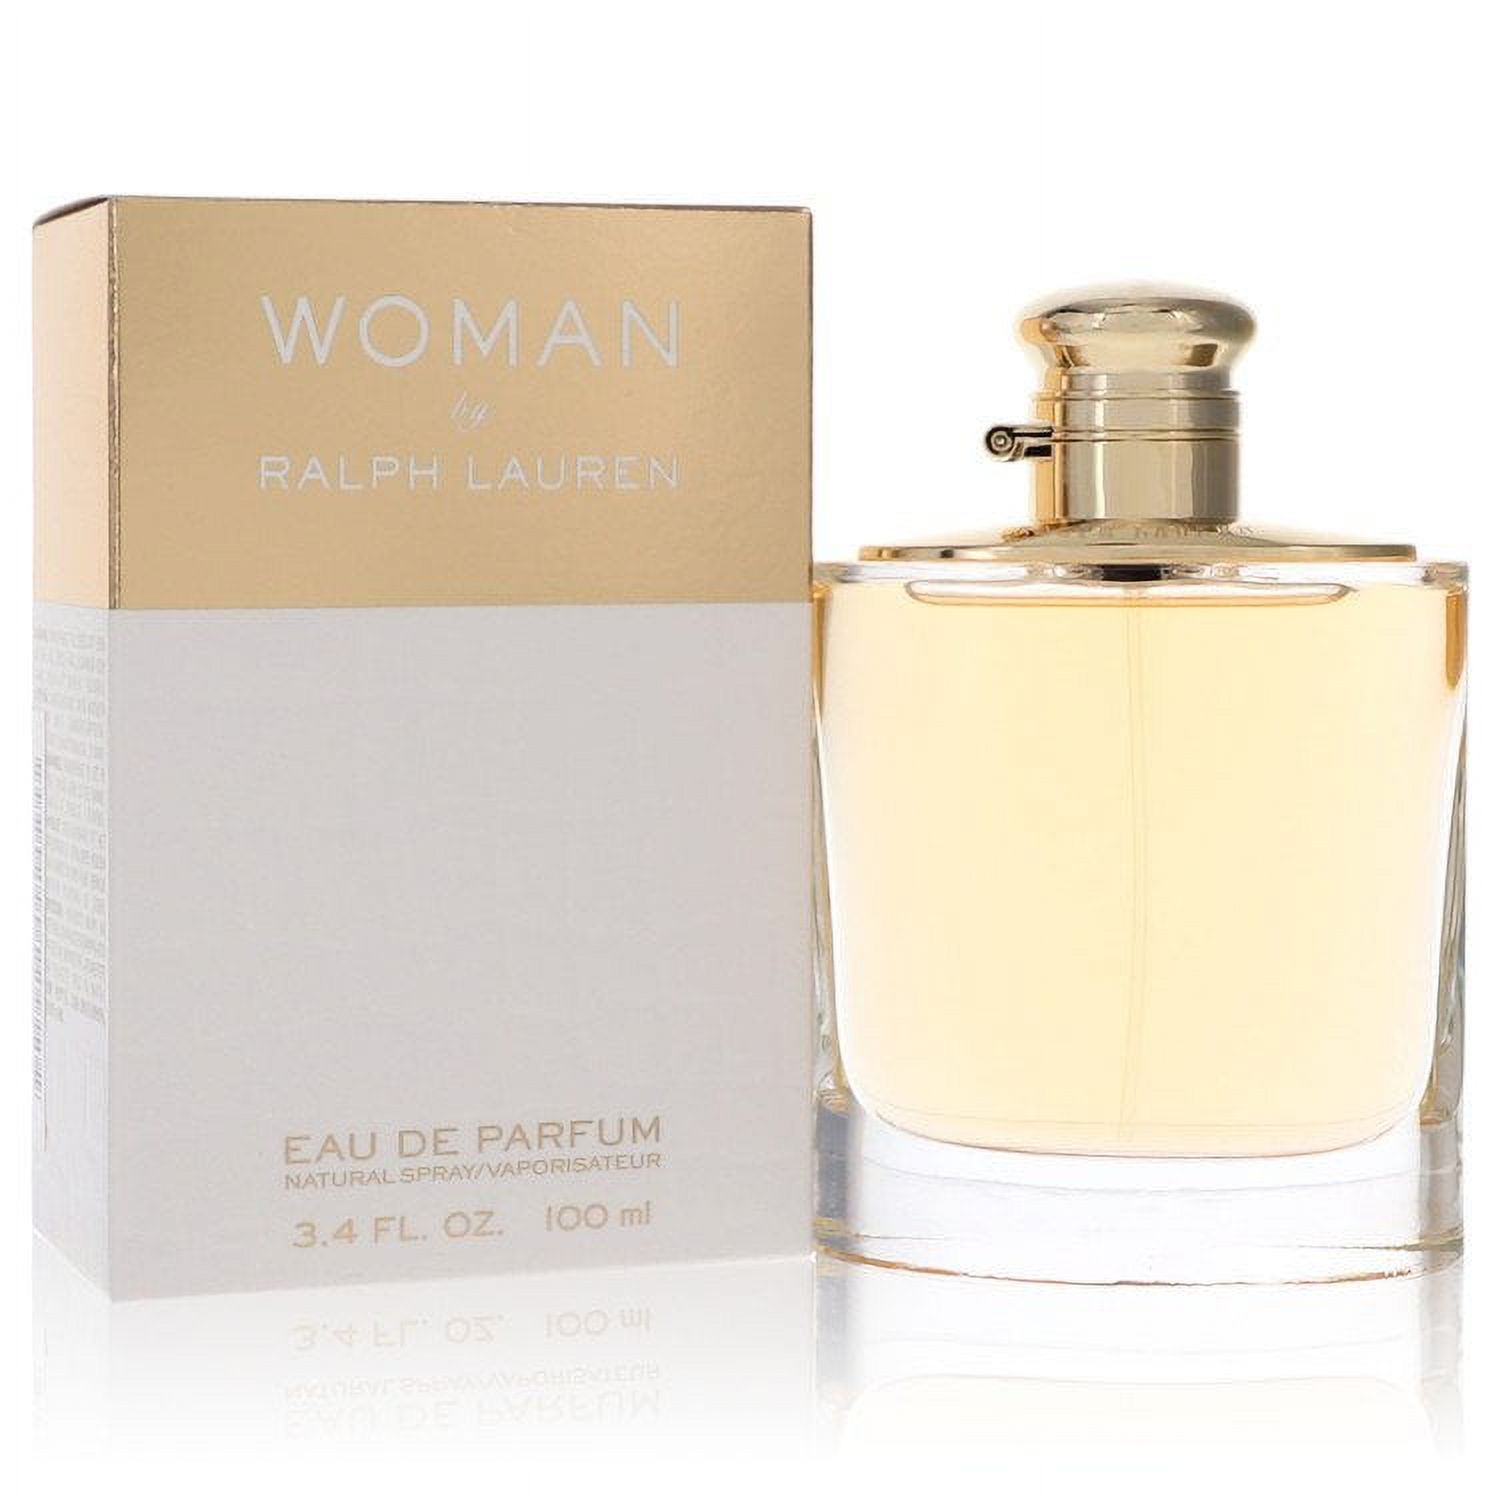 Ralph Lauren Woman by Ralph Lauren Eau De Parfum Spray 3.4 oz for Women - image 1 of 1